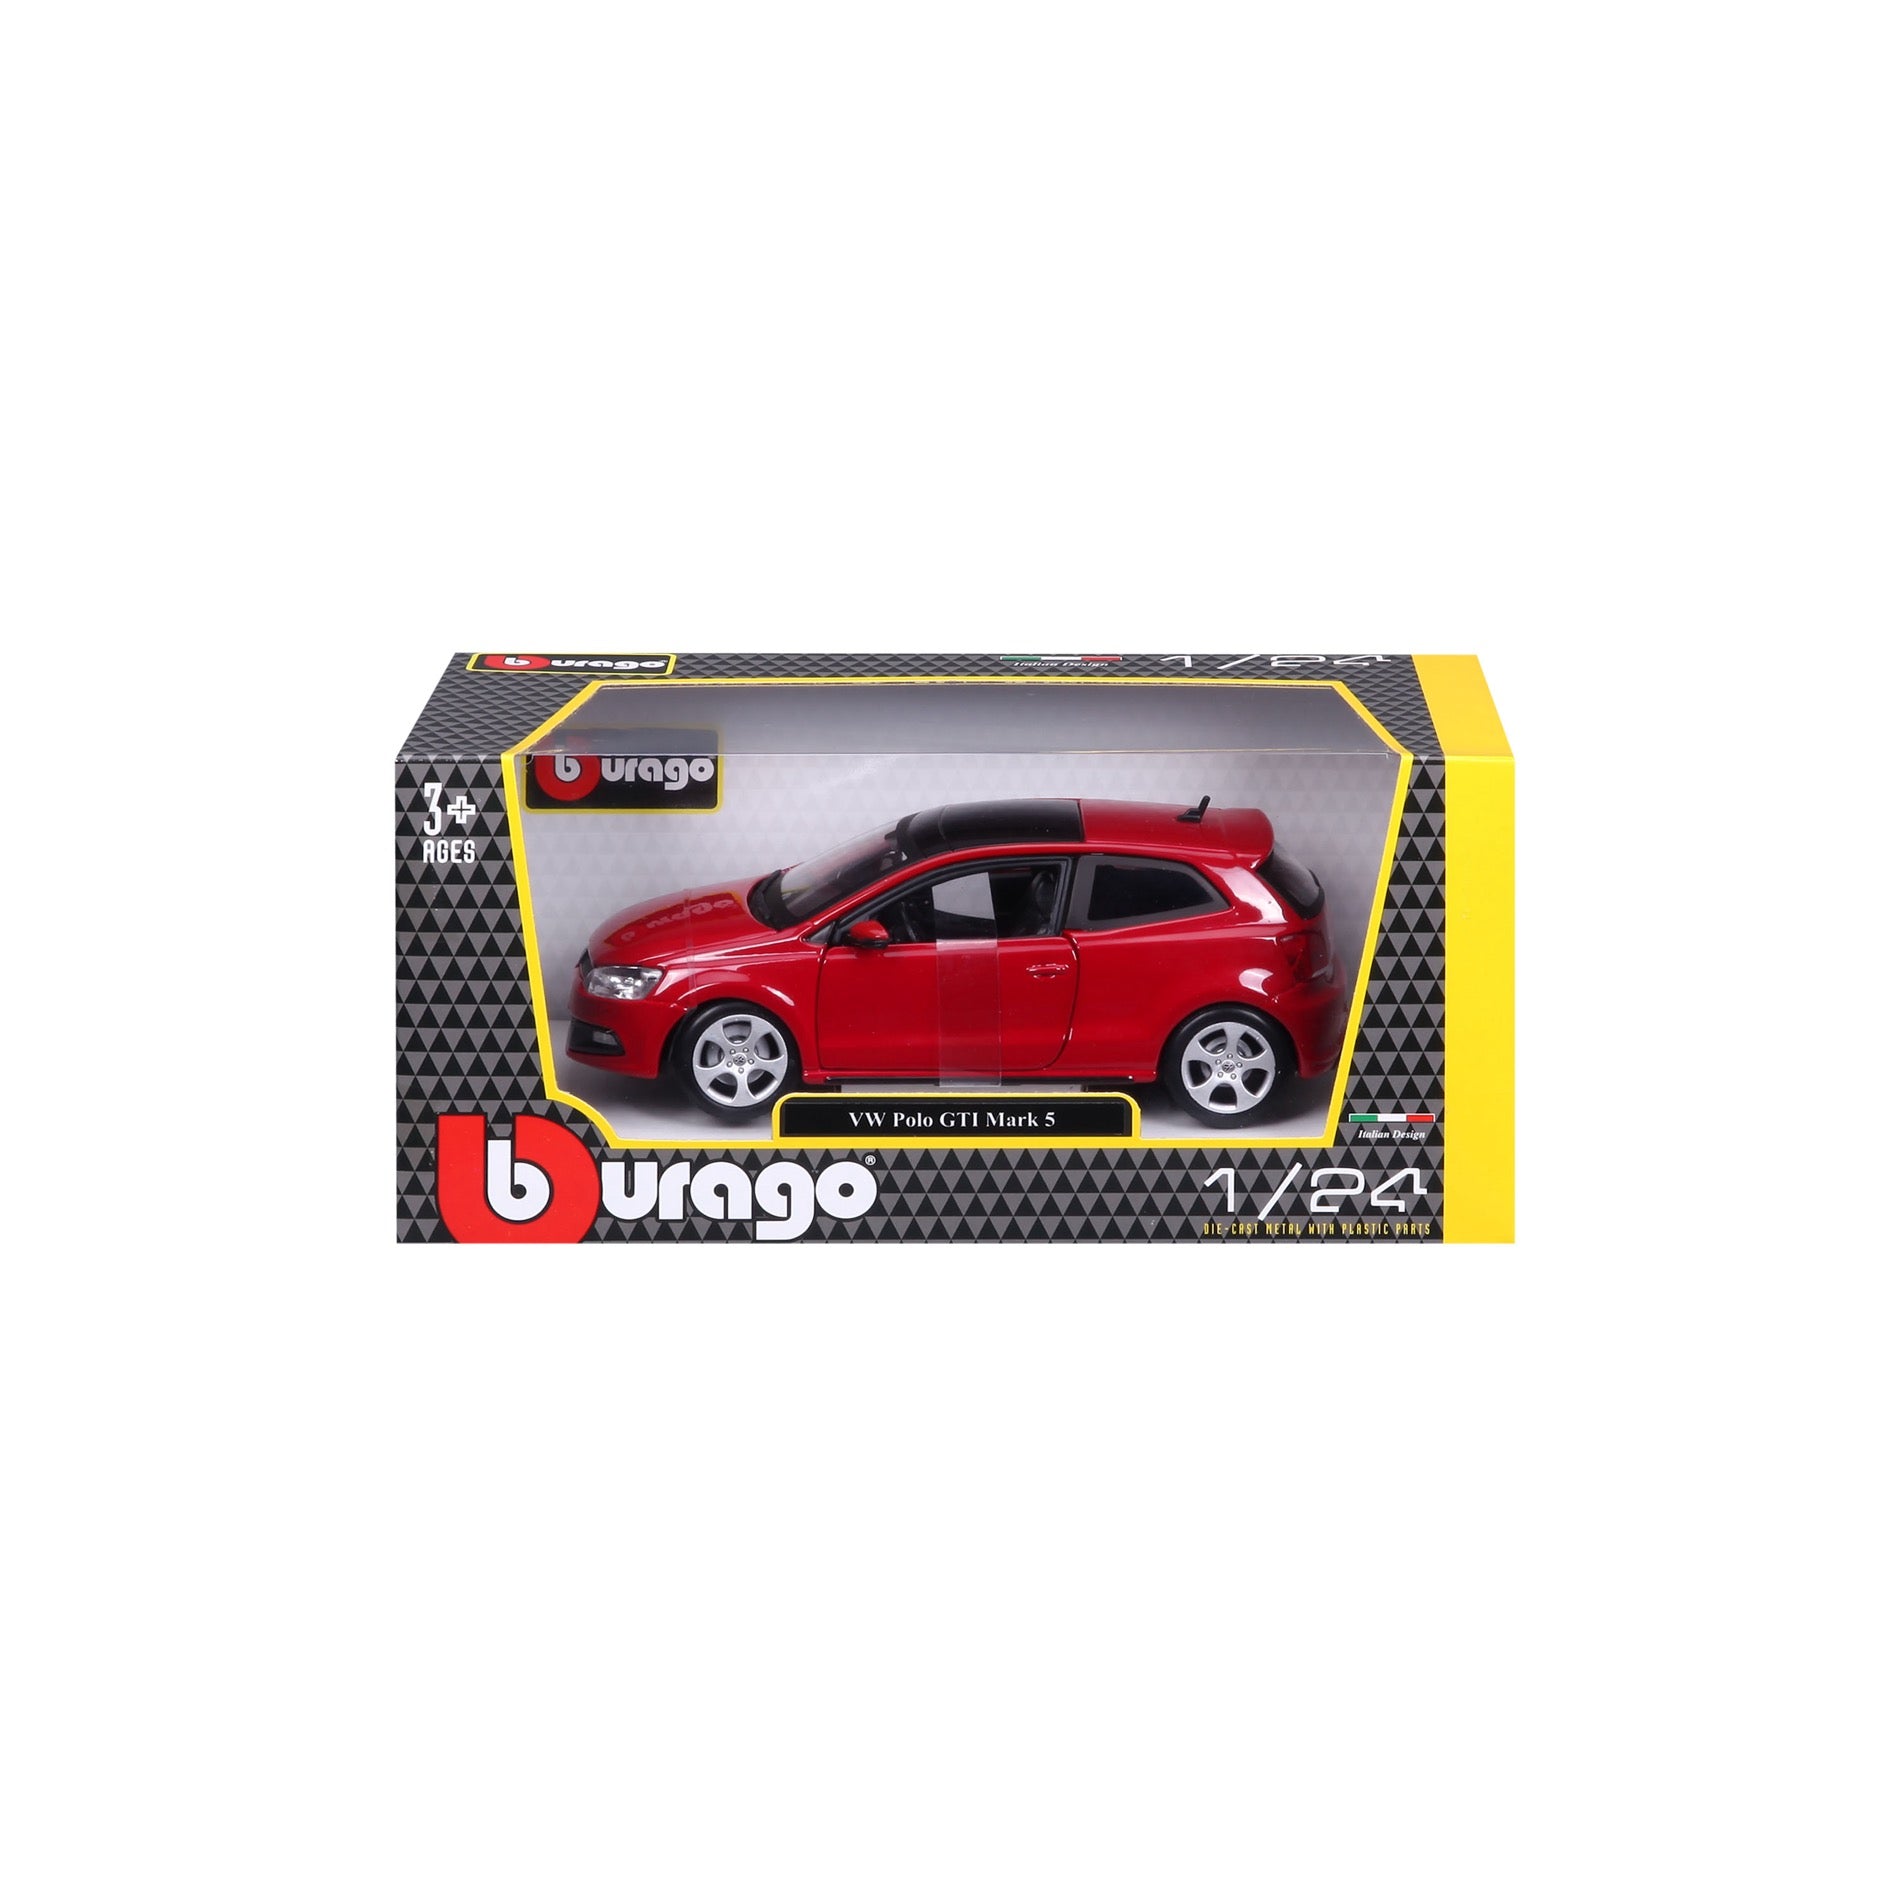 18-21059 RD - Bburago - 1:24 - VW Polo GTI Mark 5 - Rossa